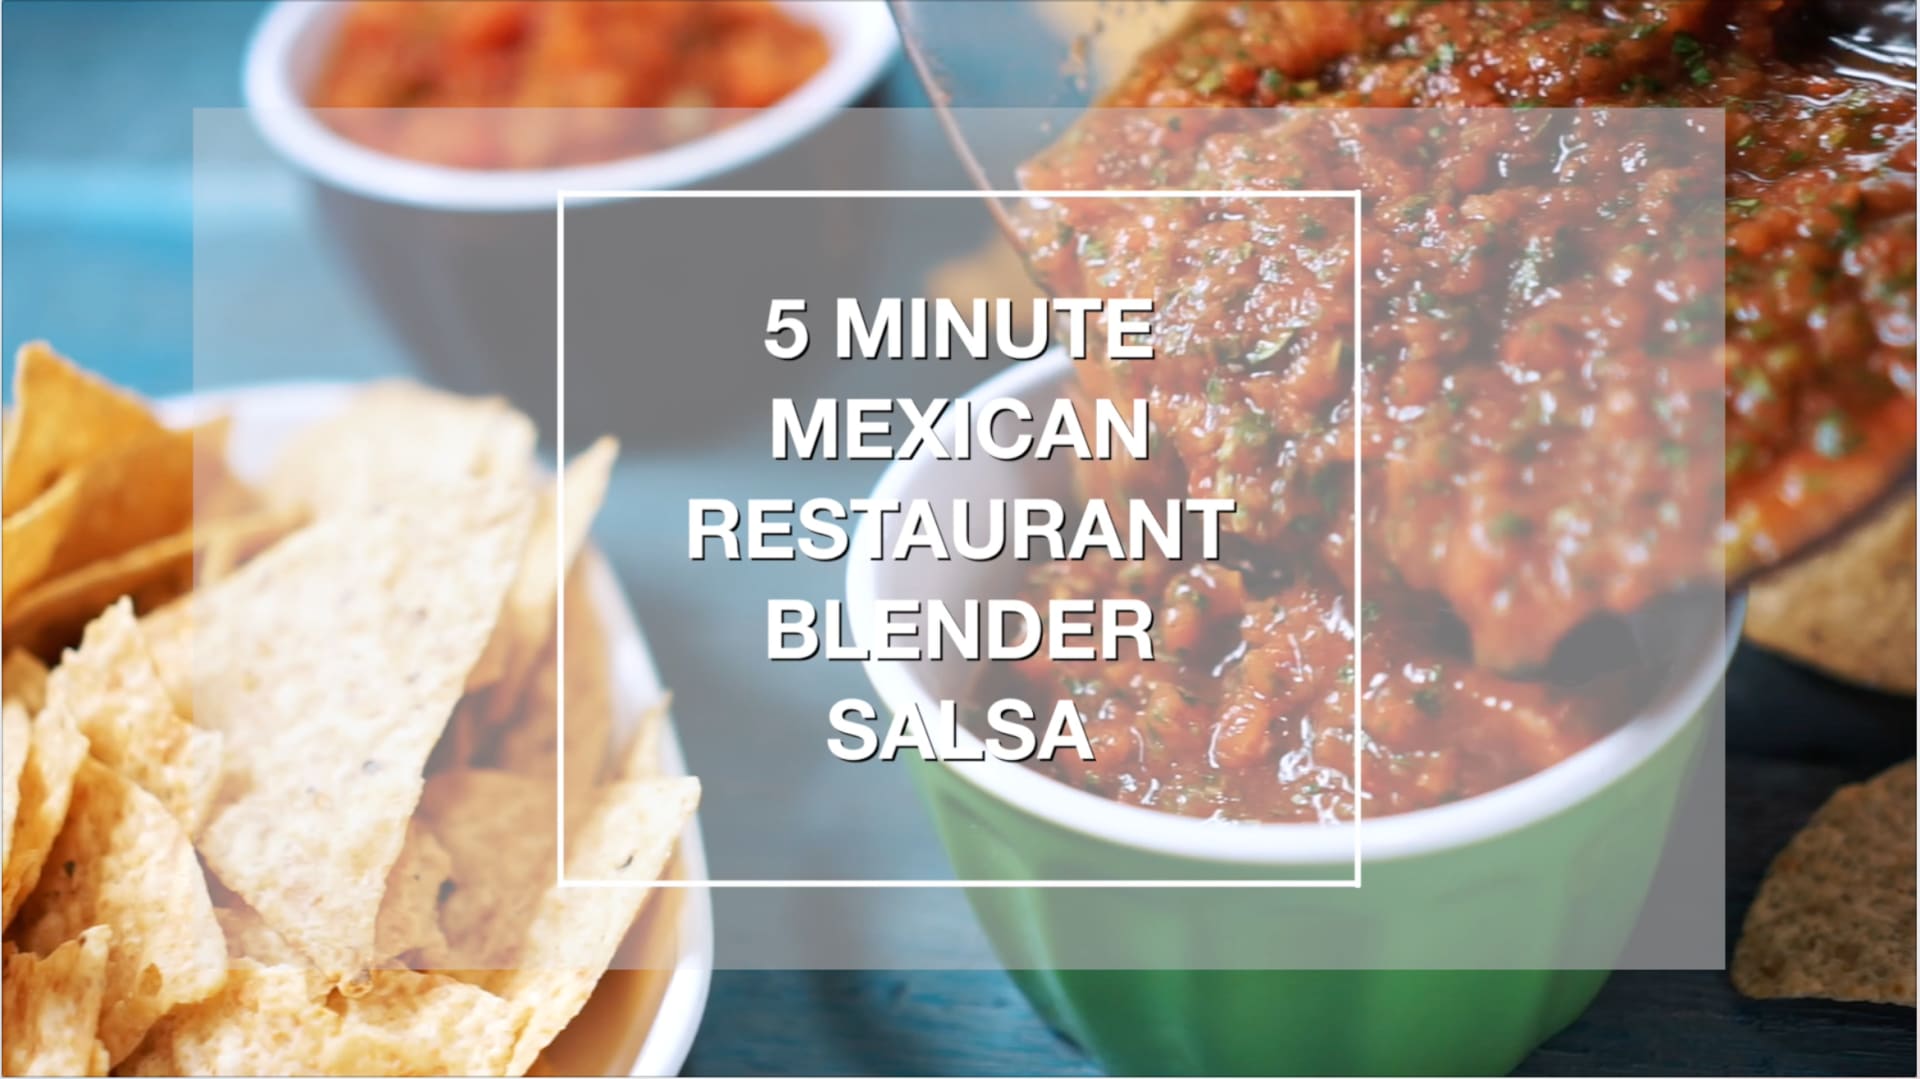 Restaurant Blender Salsa Recipe (Video) - Gluesticks Blog